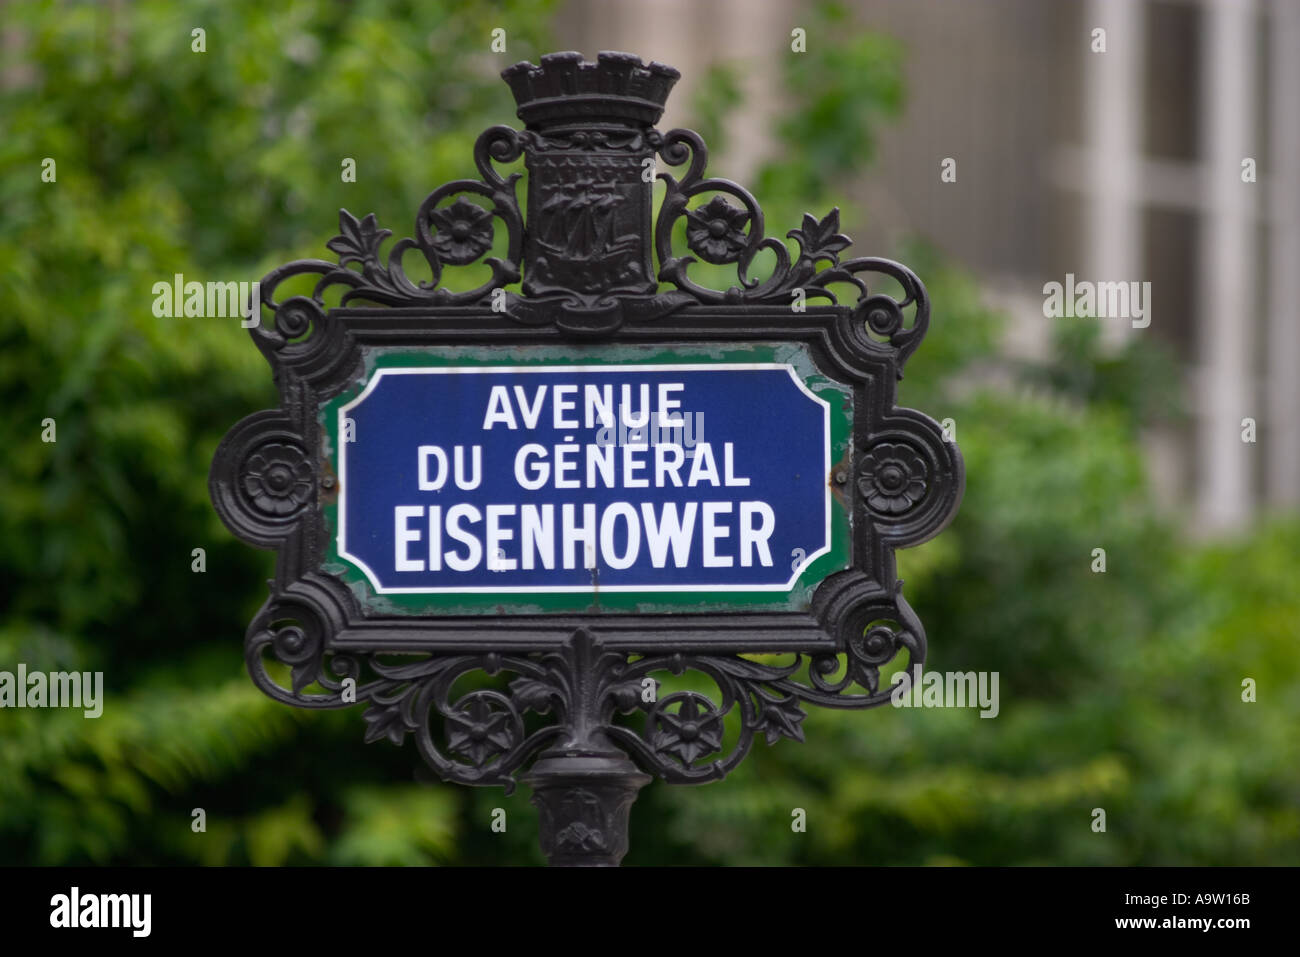 Avenue du General Eisenhower street sign Paris France Stock Photo